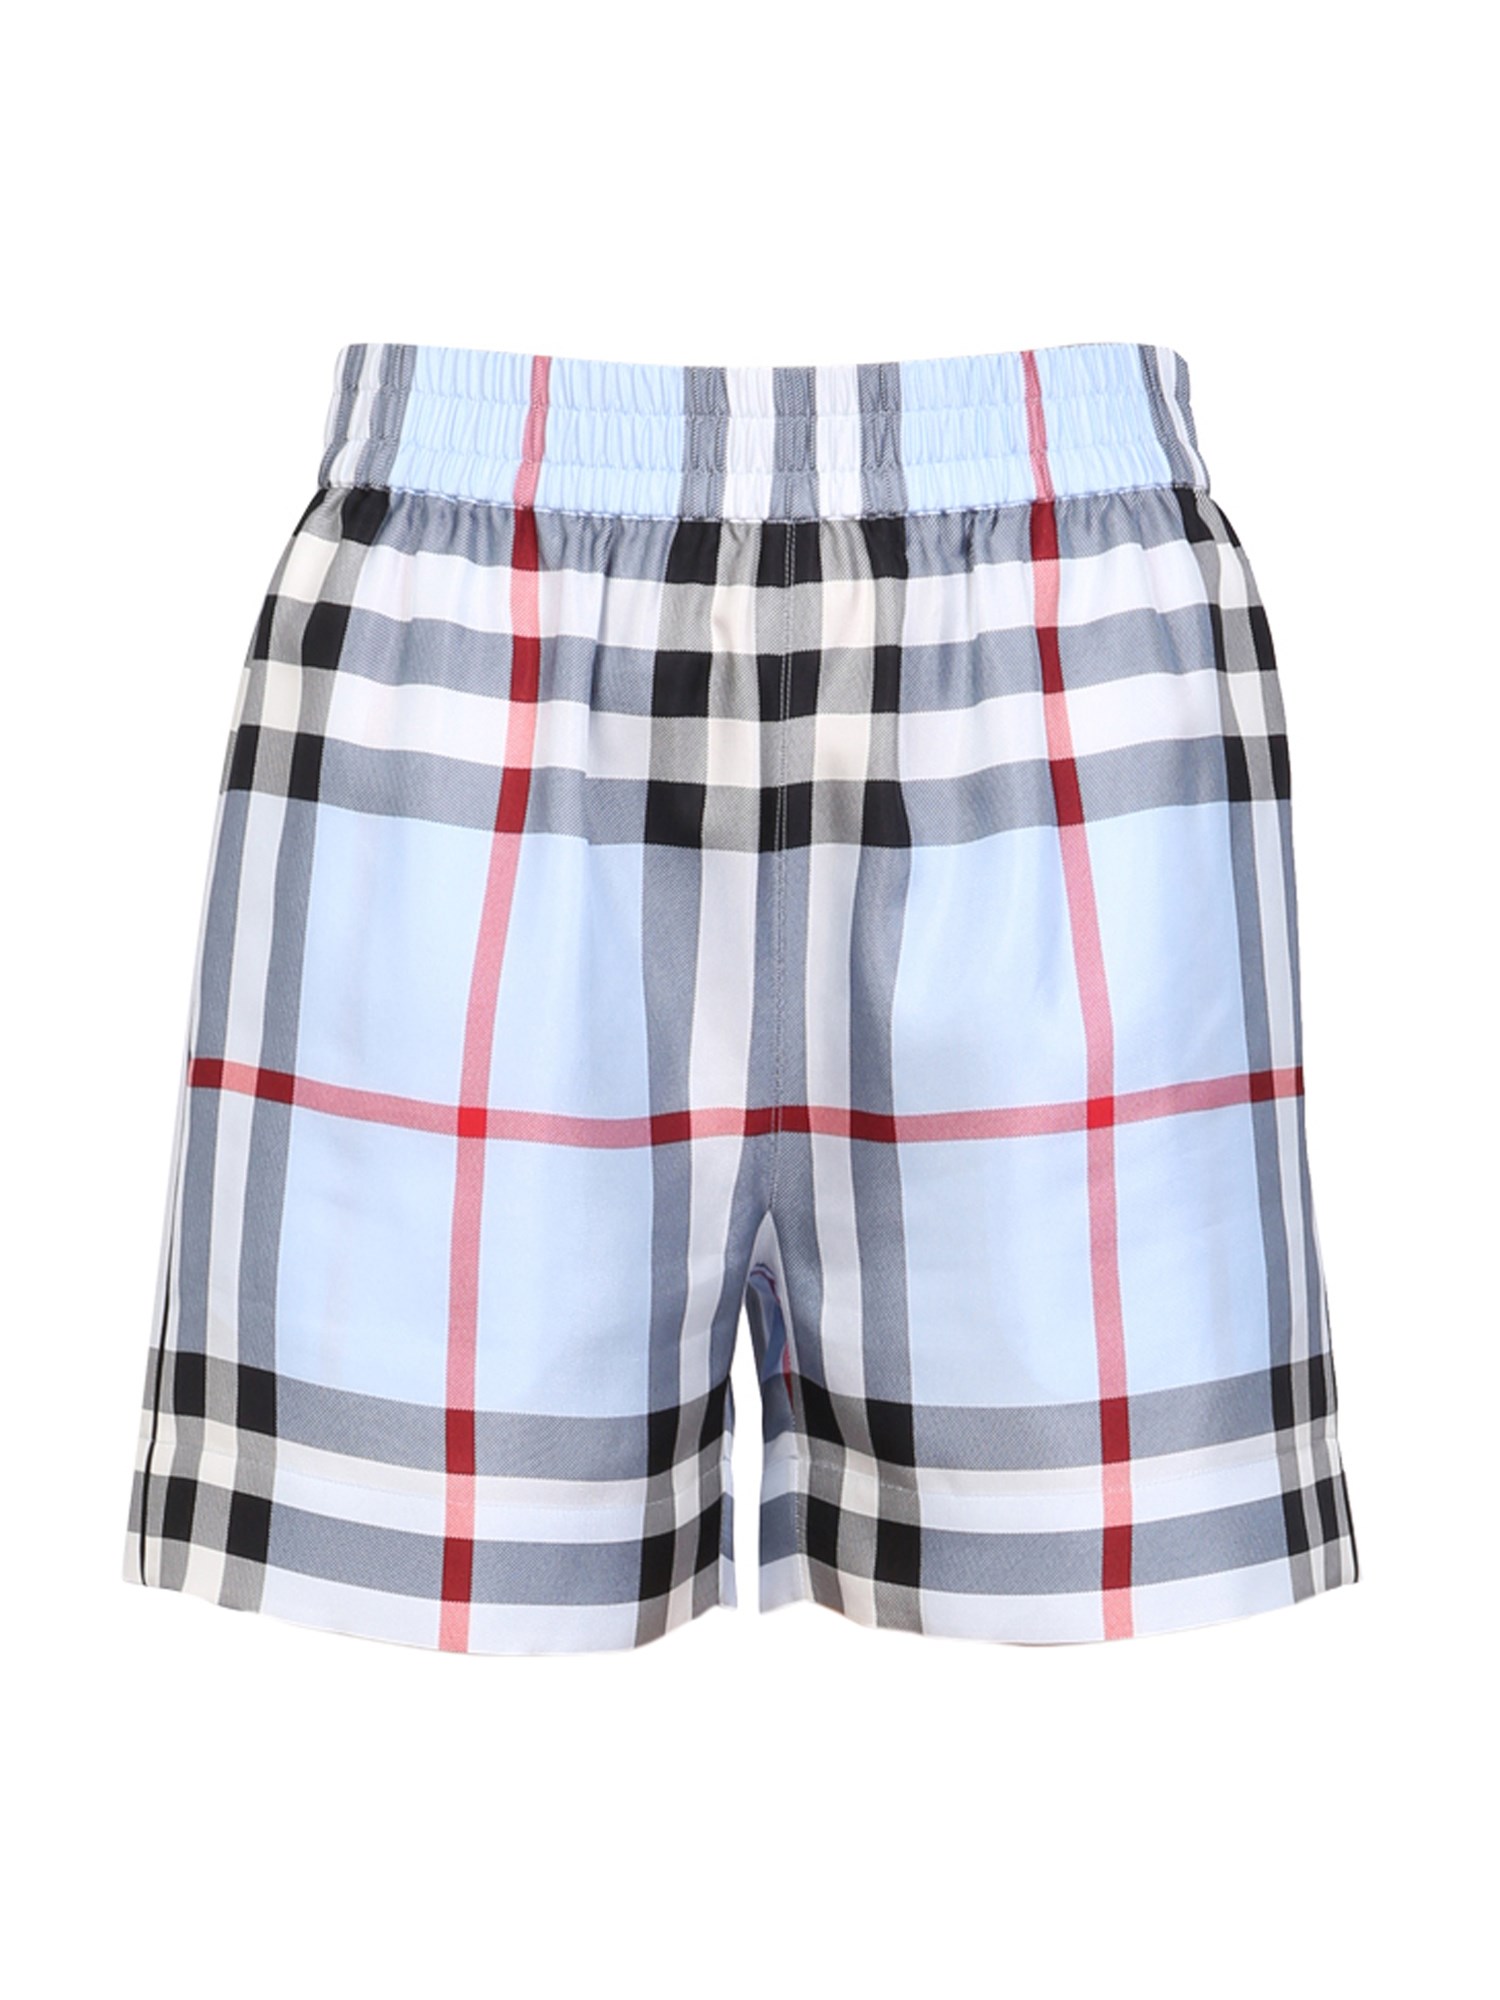 burberry check pattern shorts